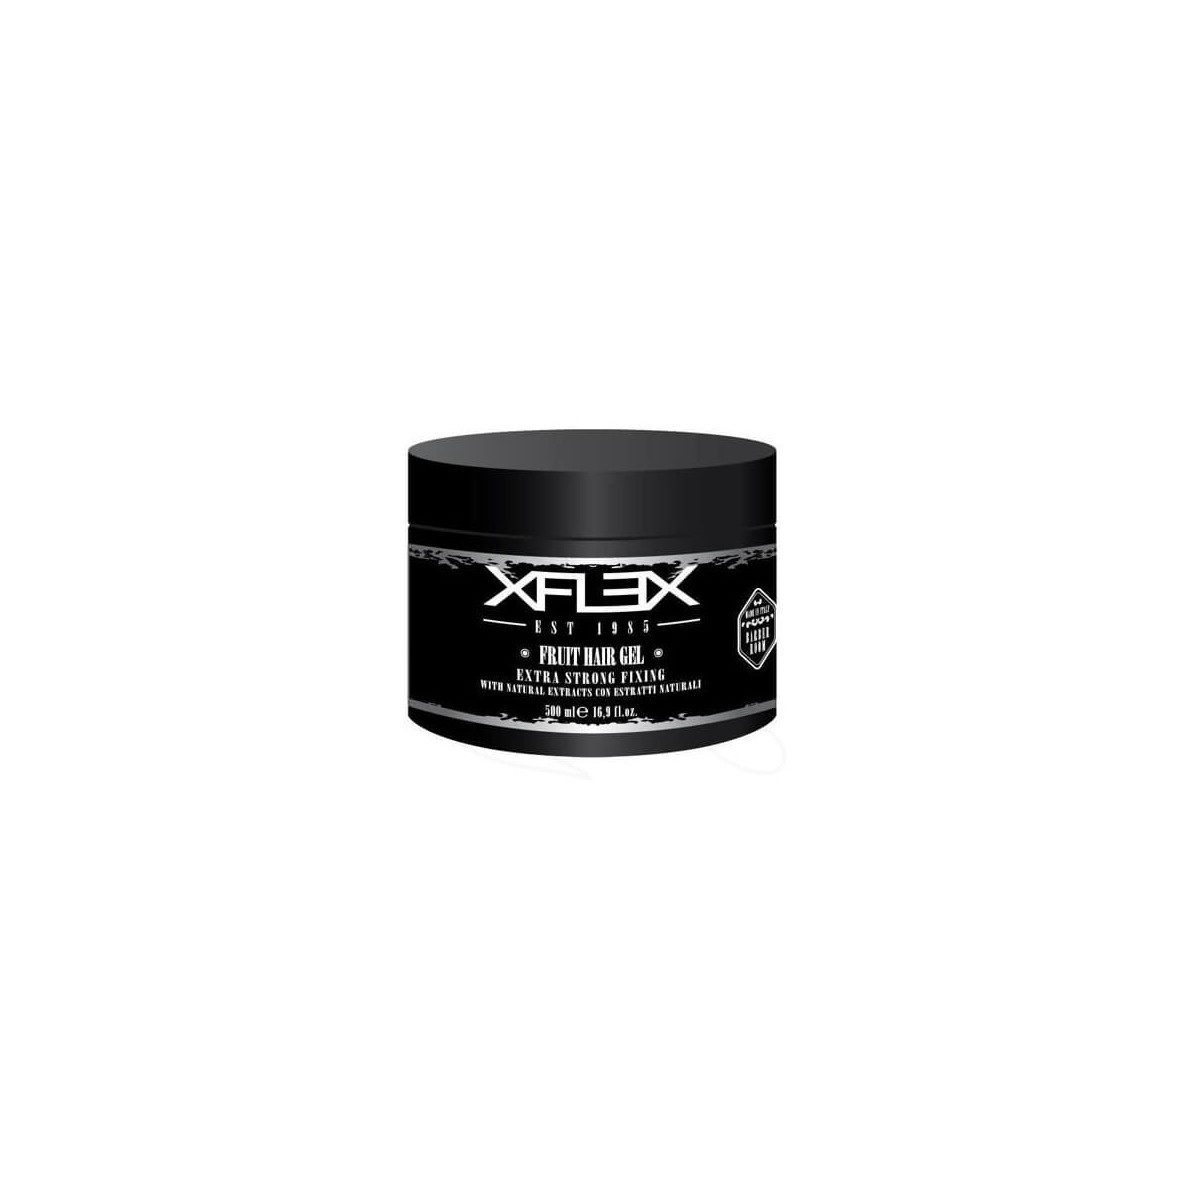 Xflex Fruit Hair Gel Vaso Nuova Confezione 500ml